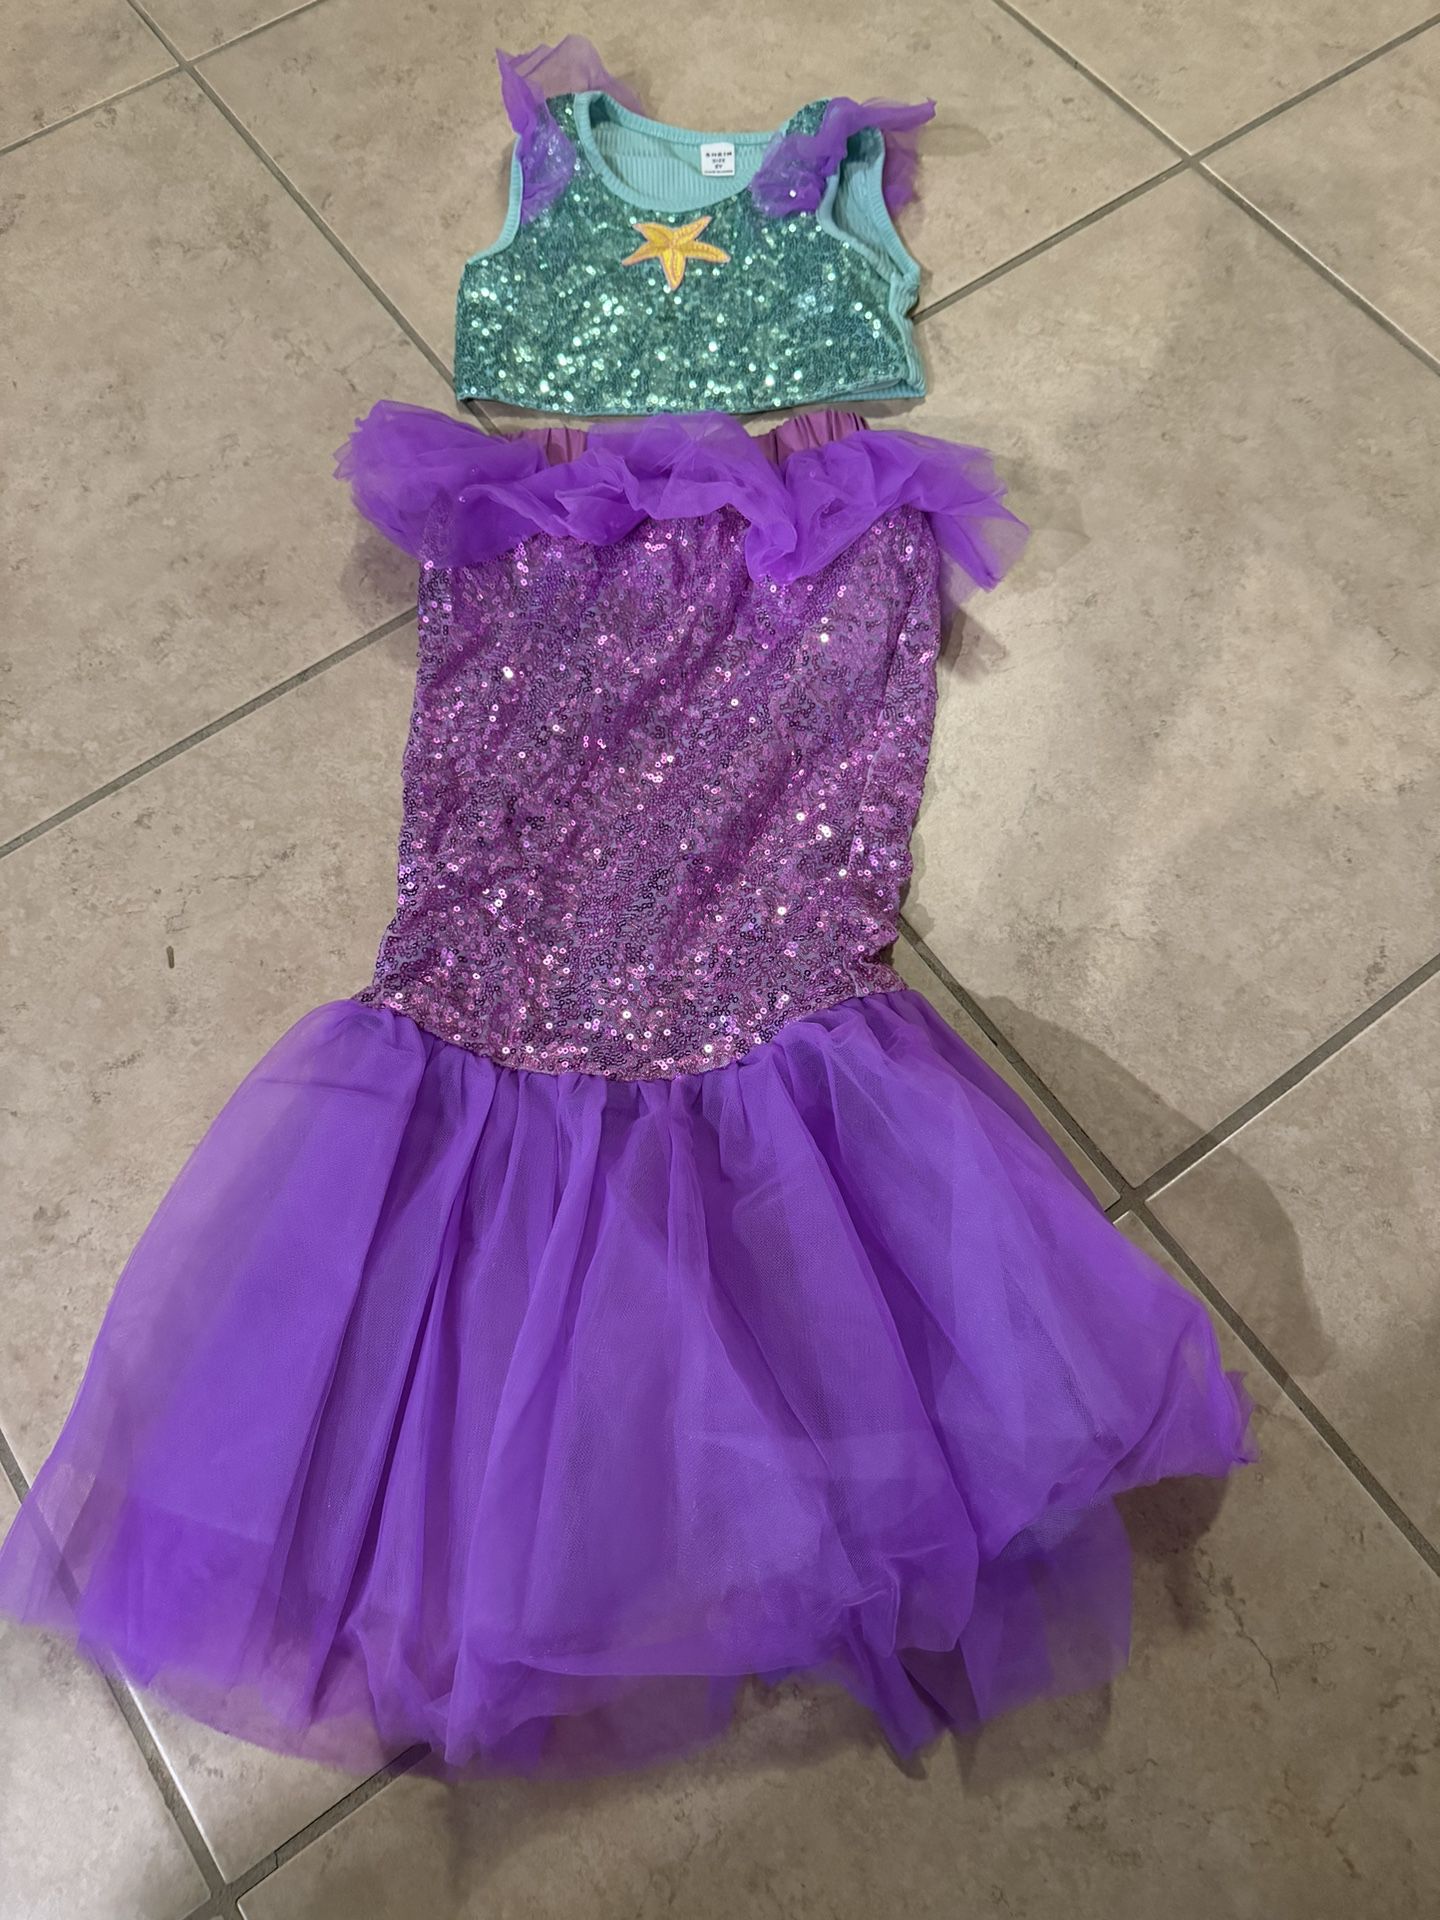 Mermaid Dress 4/5